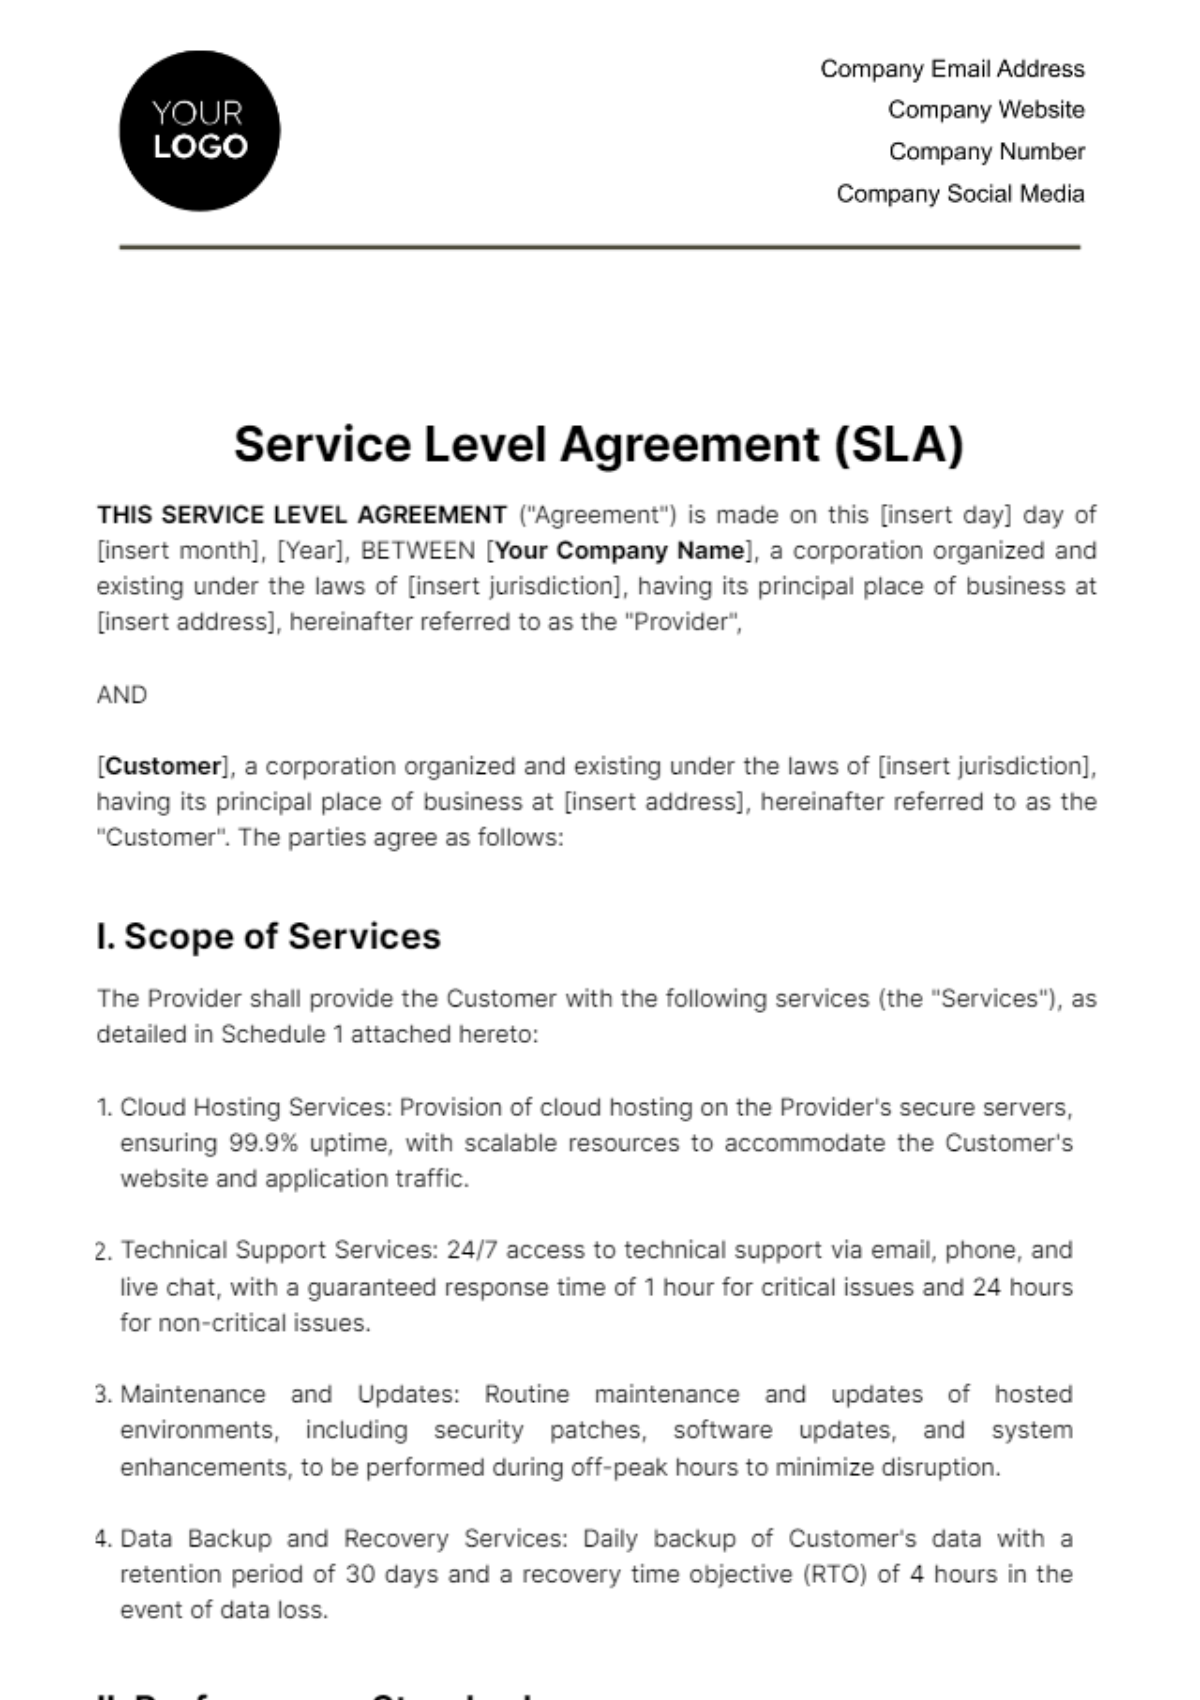 Startup Service Level Agreement (SLA) Template